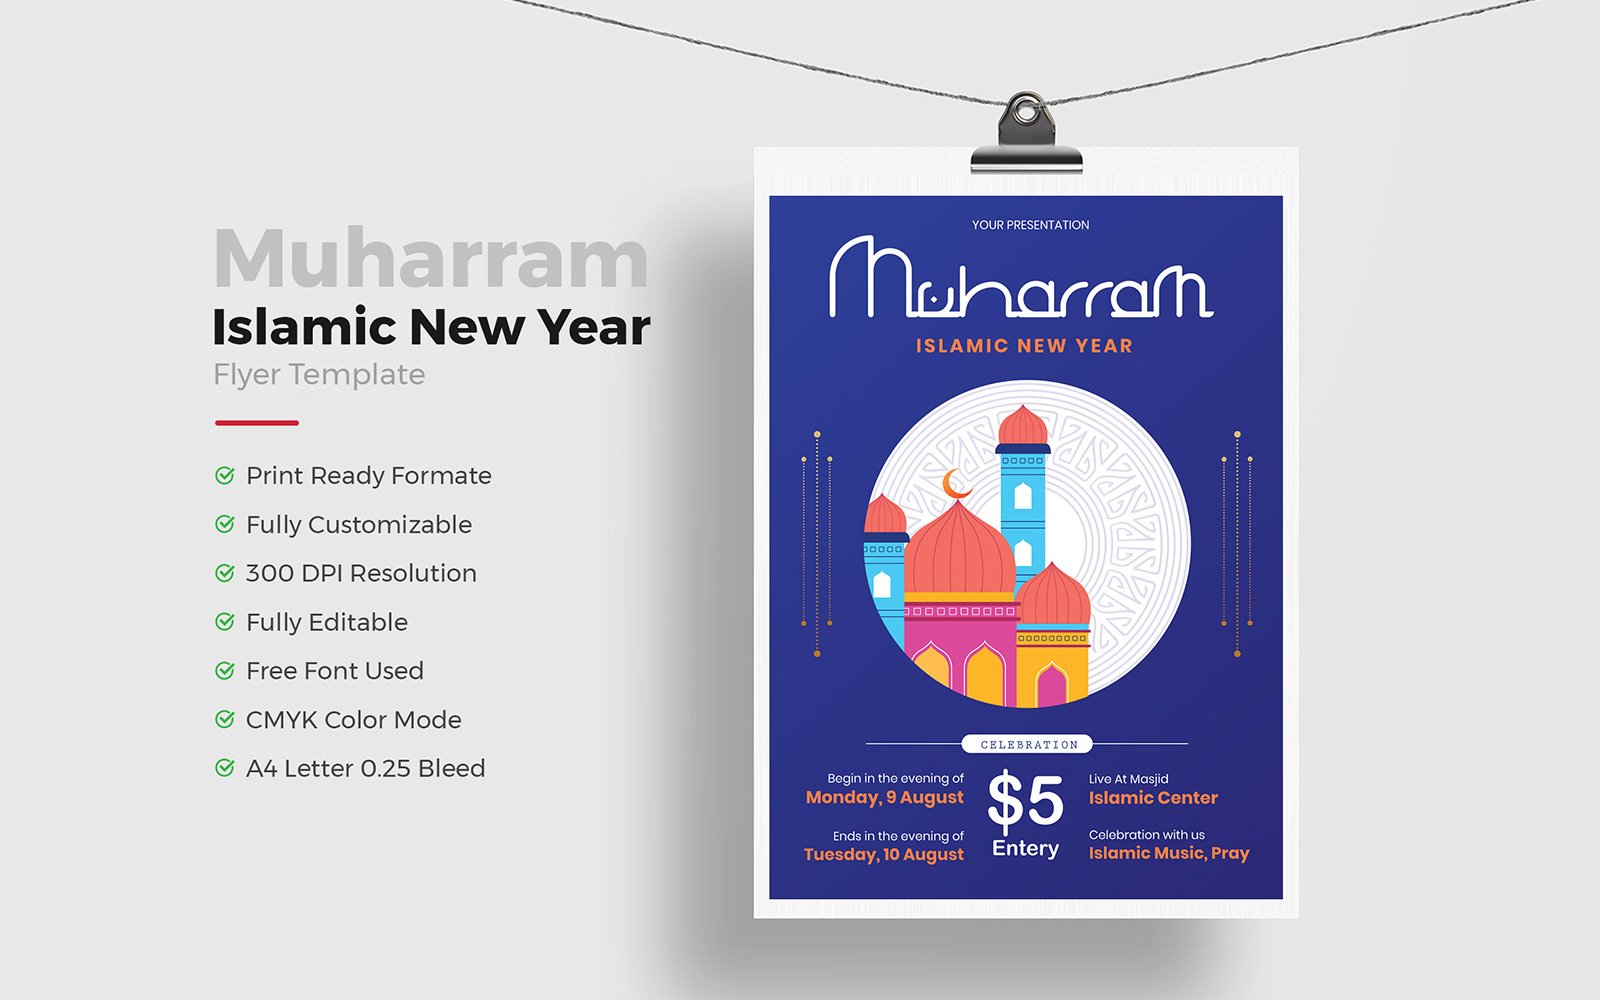 Muharram Islamic New Year Flyer